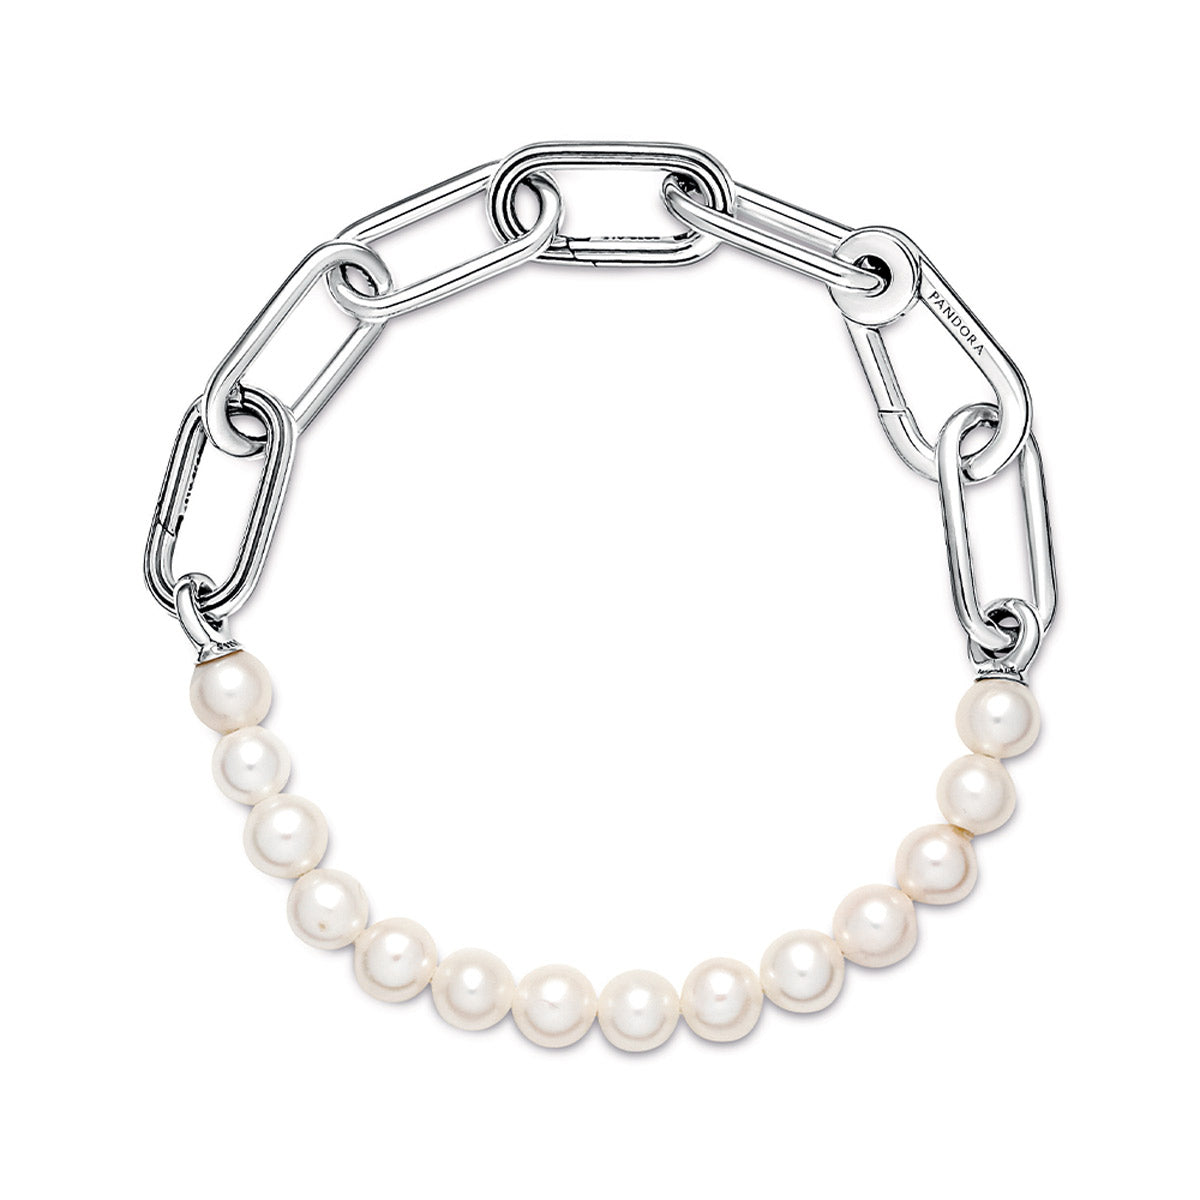 Pandora ME - Freshwater Cultured Pear Link Chain Bracelet